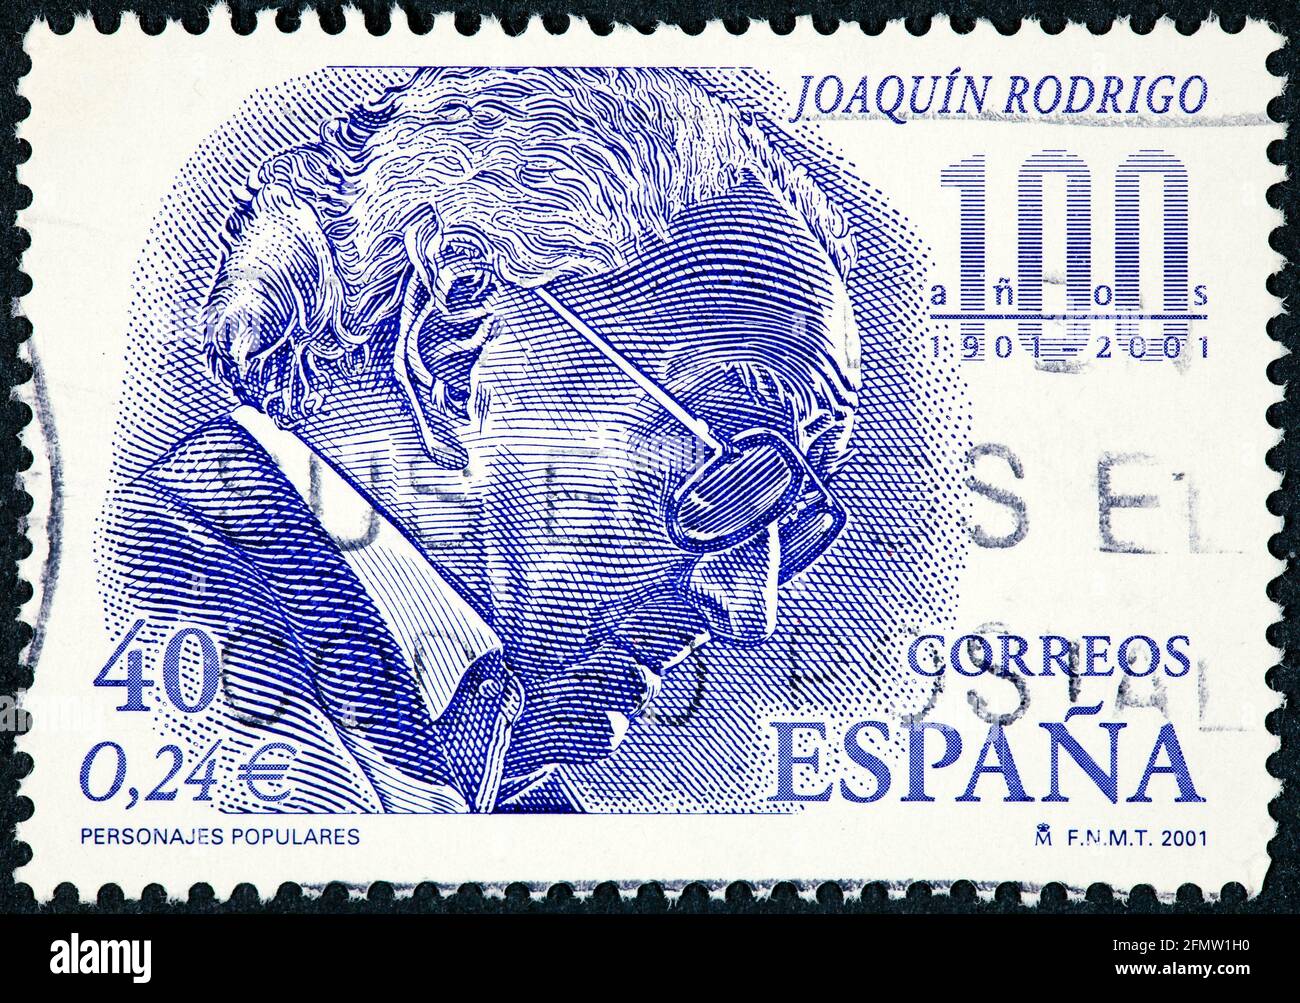 SPAIN - CIRCA 2001: A stamp printed in Spain shows Joaquin Rodrigo Stock Photo